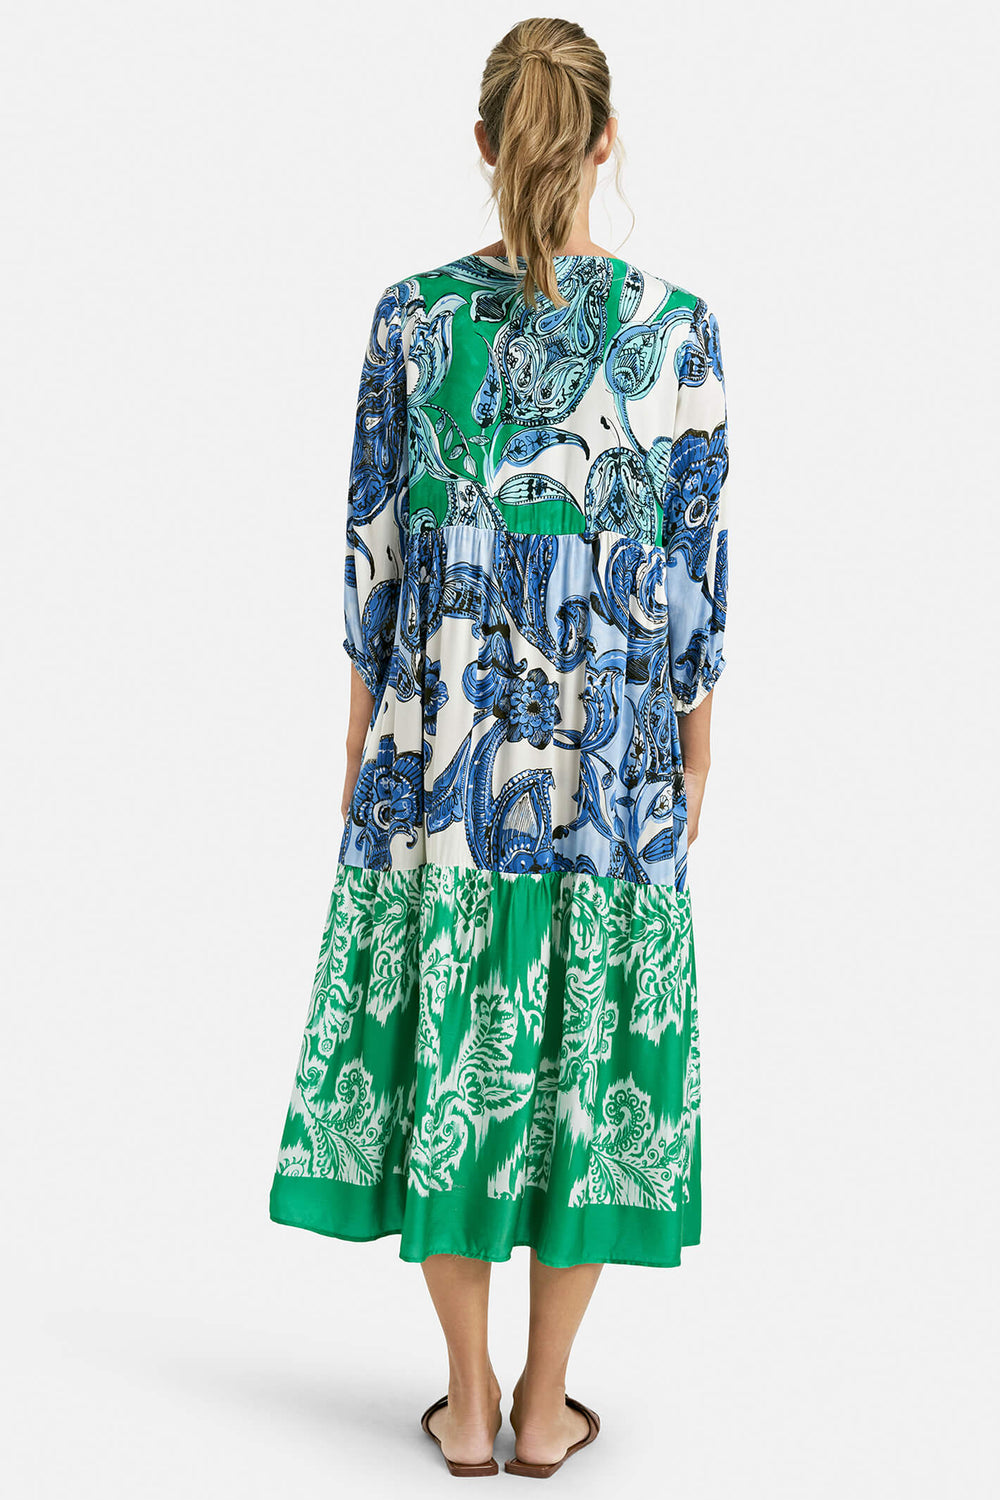 Milano 6028 Denim Blue Green Print Dress - Experience Boutique